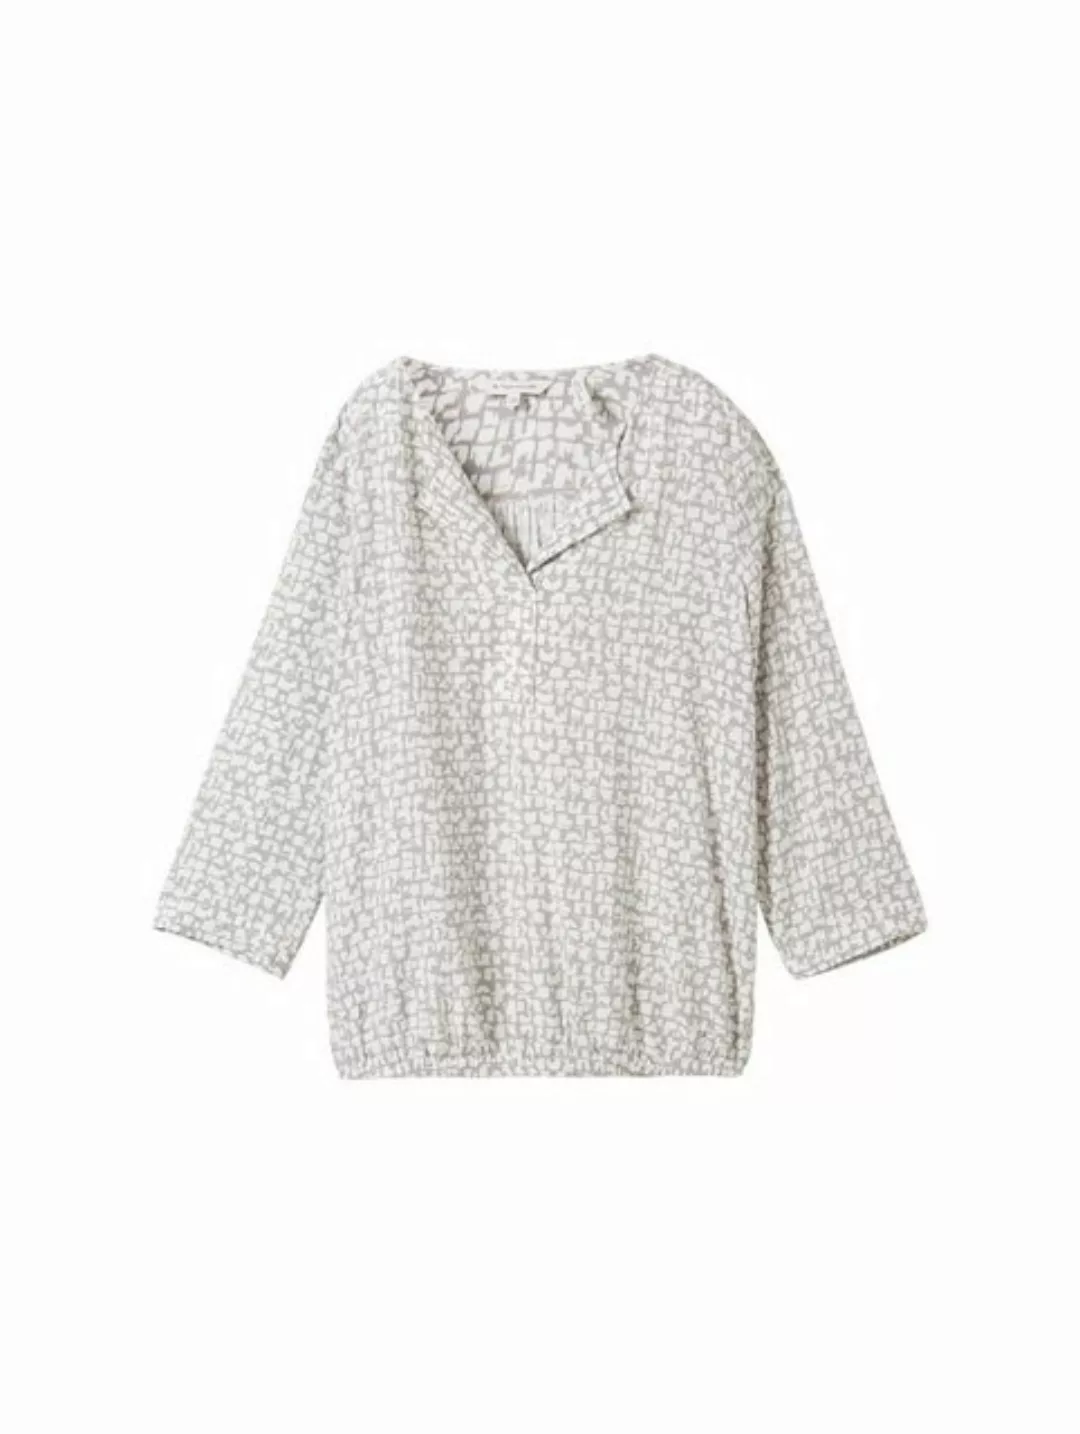 TOM TAILOR Blusenshirt printed blouse, neutral tile design günstig online kaufen